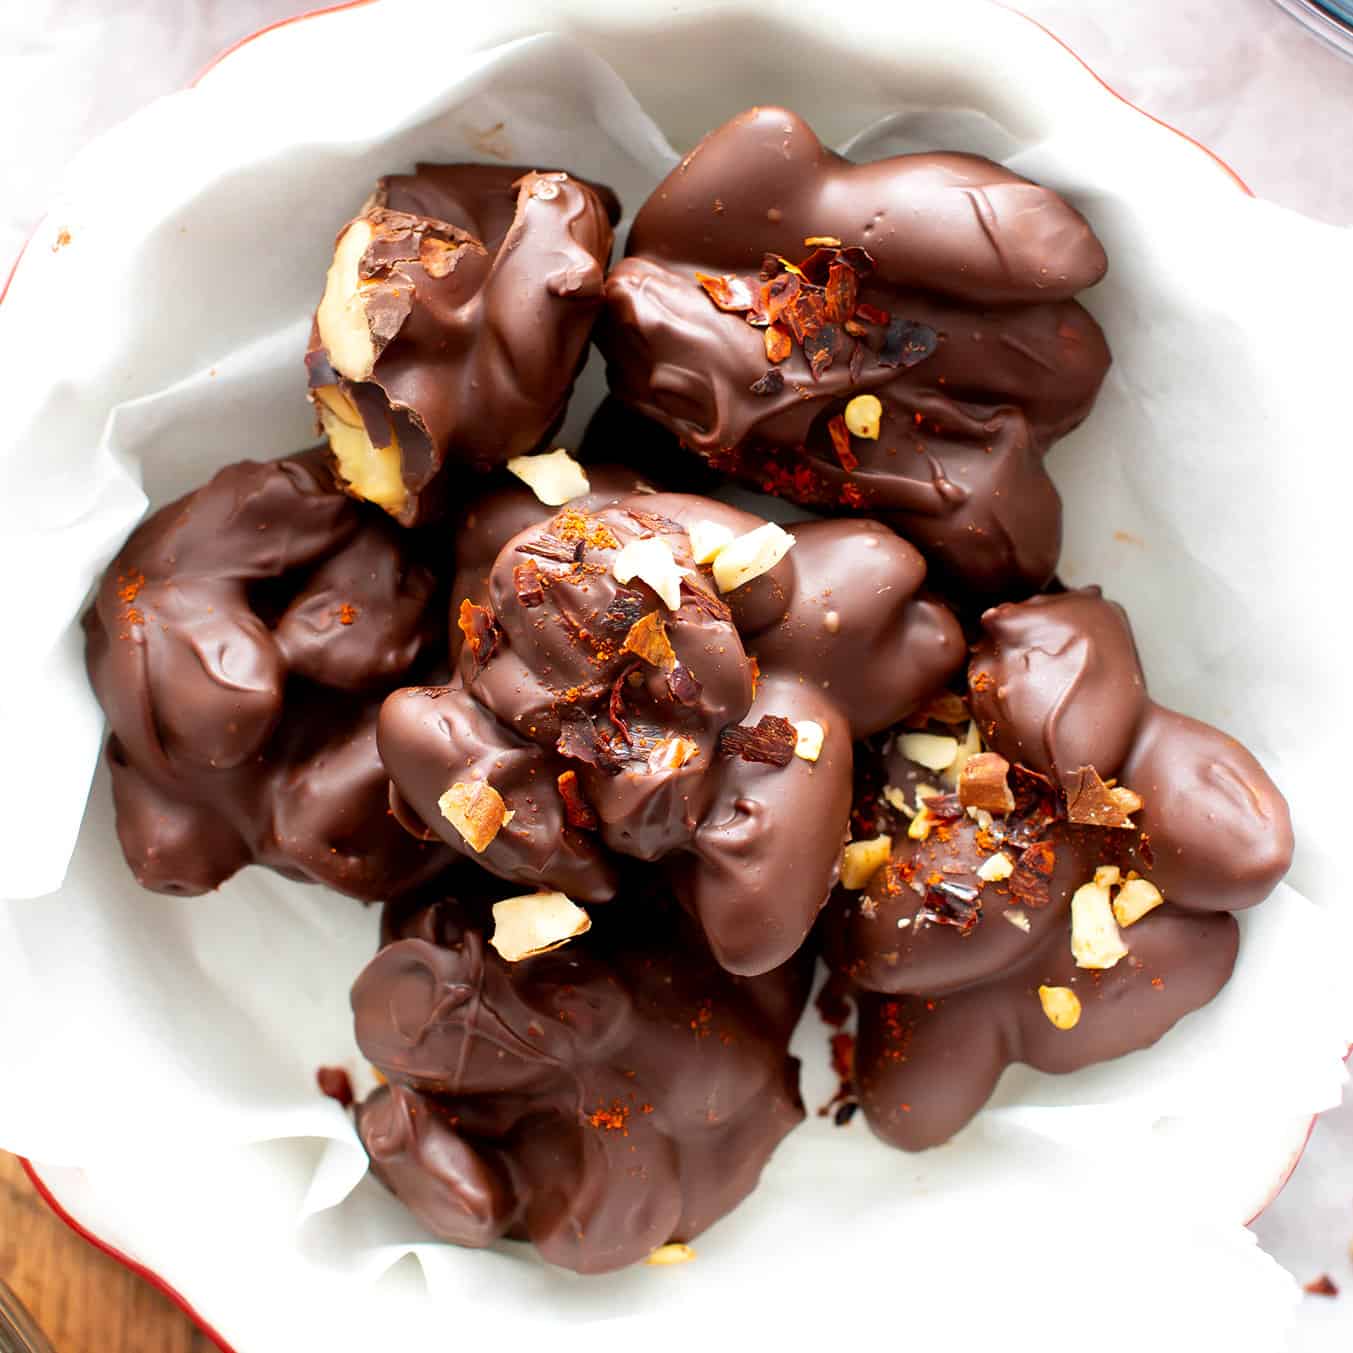 https://beamingbaker.com/wp-content/uploads/2019/02/IGT1-Dark-Chocolate-Chili-Nut-Clusters-Recipe-Healthy-Homemade-Vegan-1.jpg